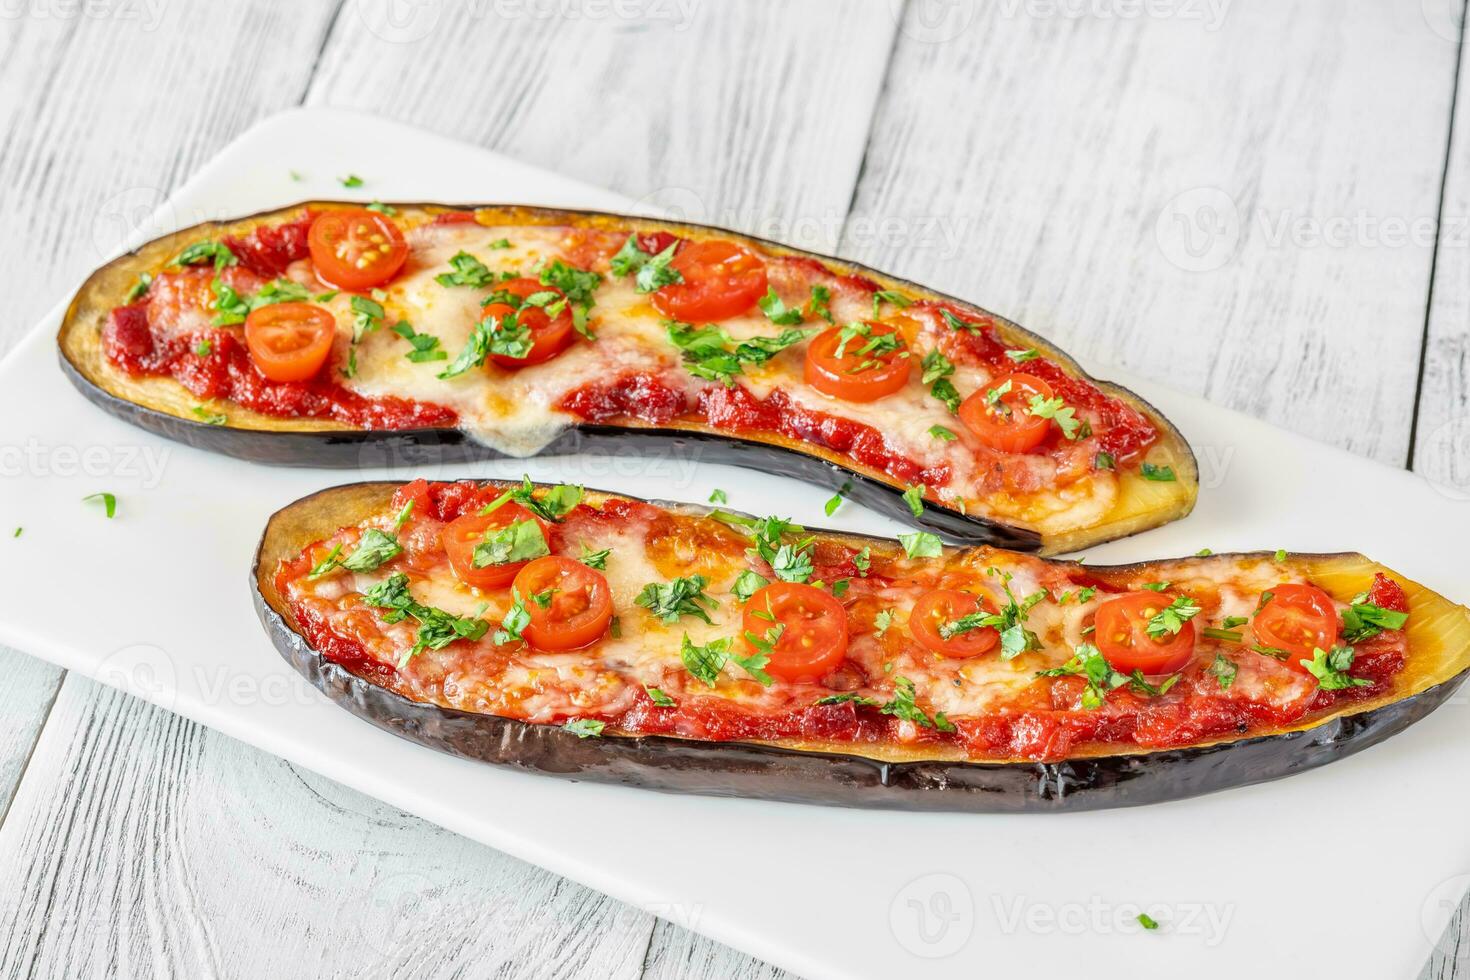 Low carb eggplant pizza photo